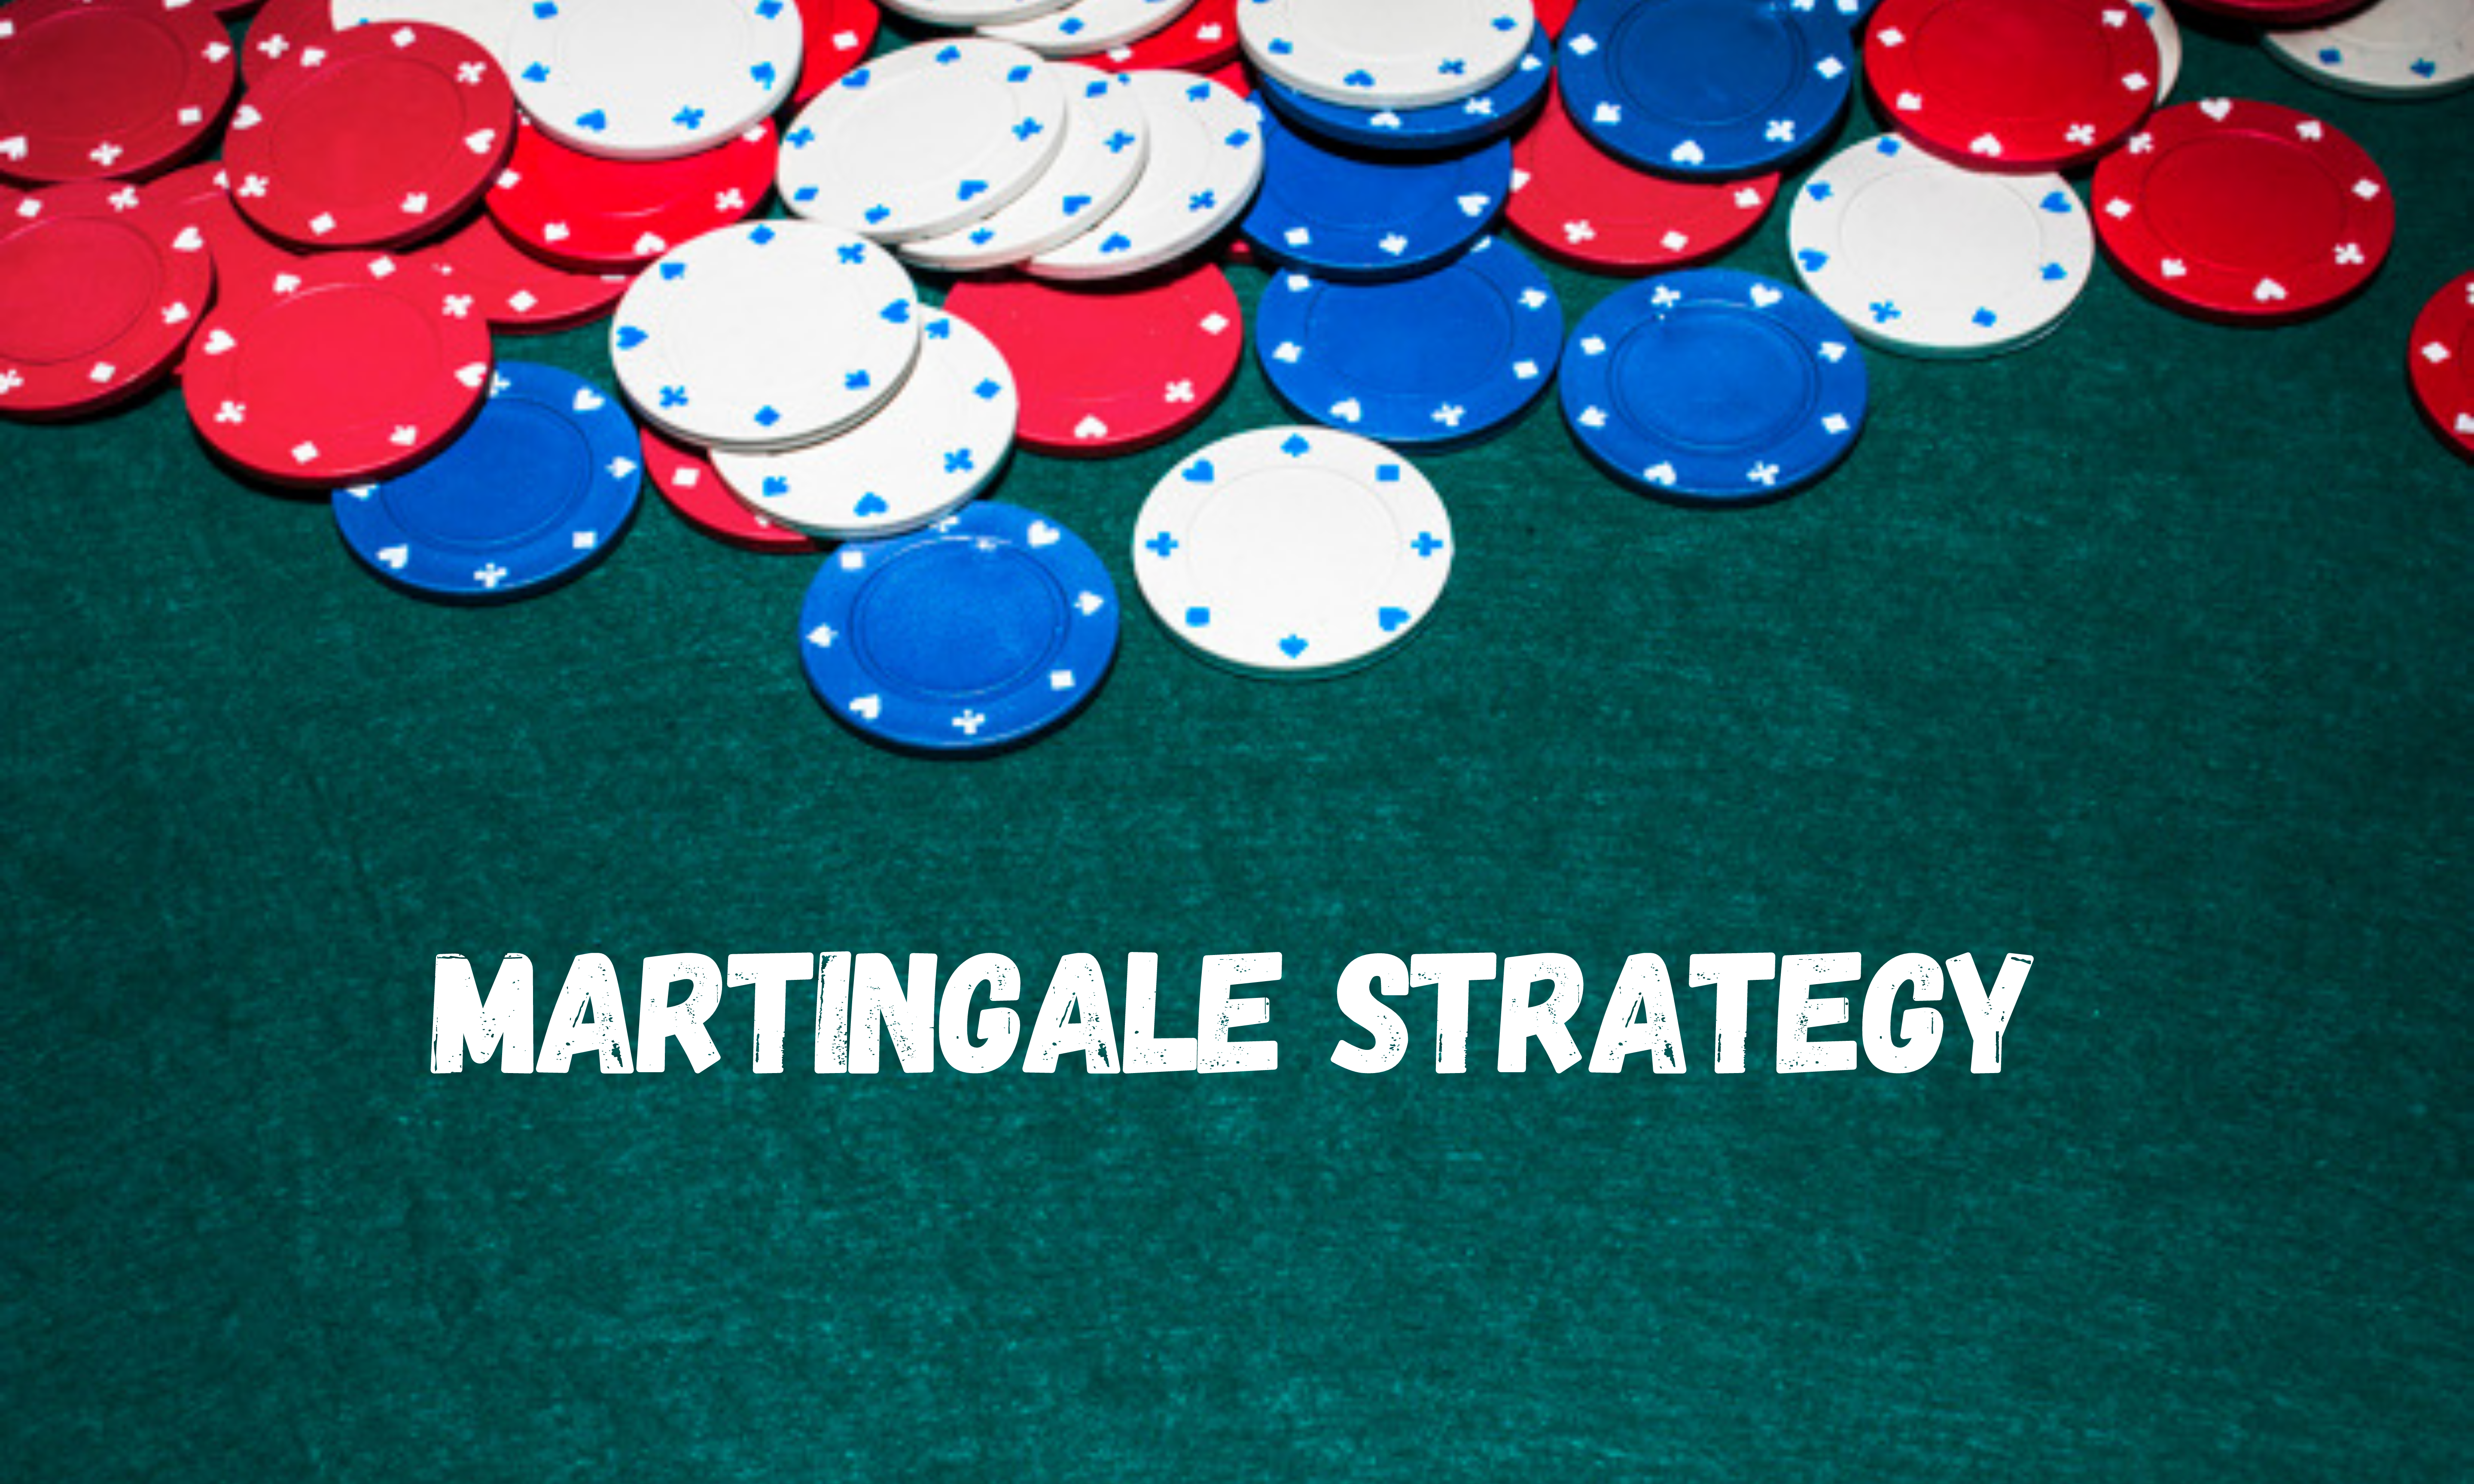 Martingale strategy